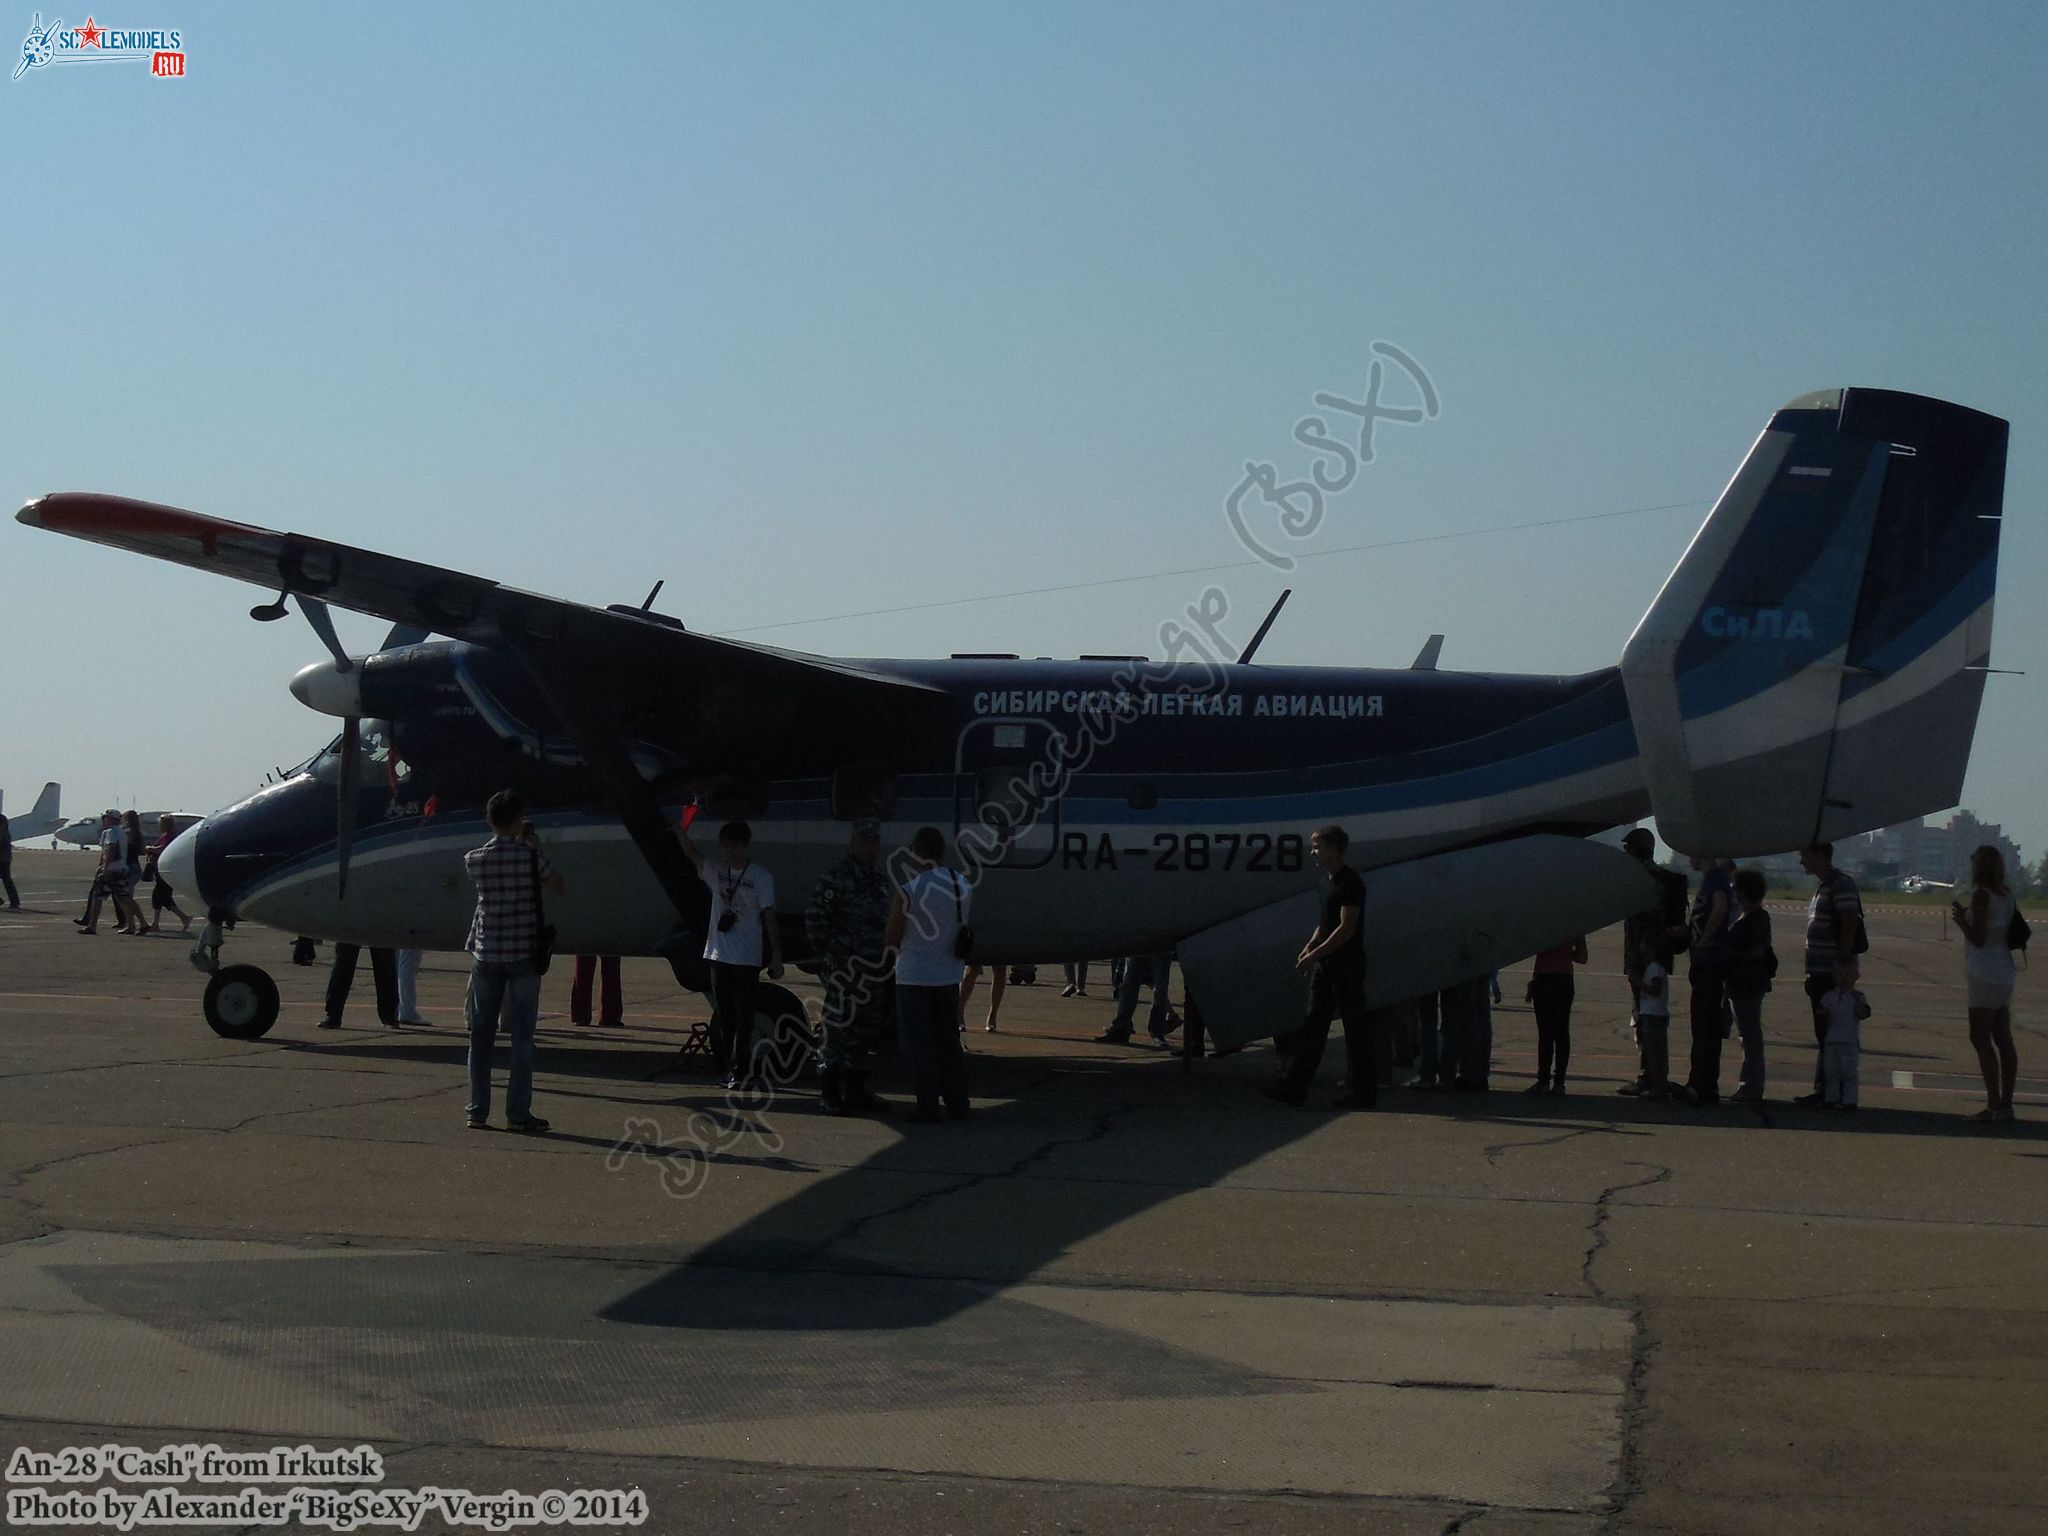 An-28 (RA-28728)_Irkutsk_022